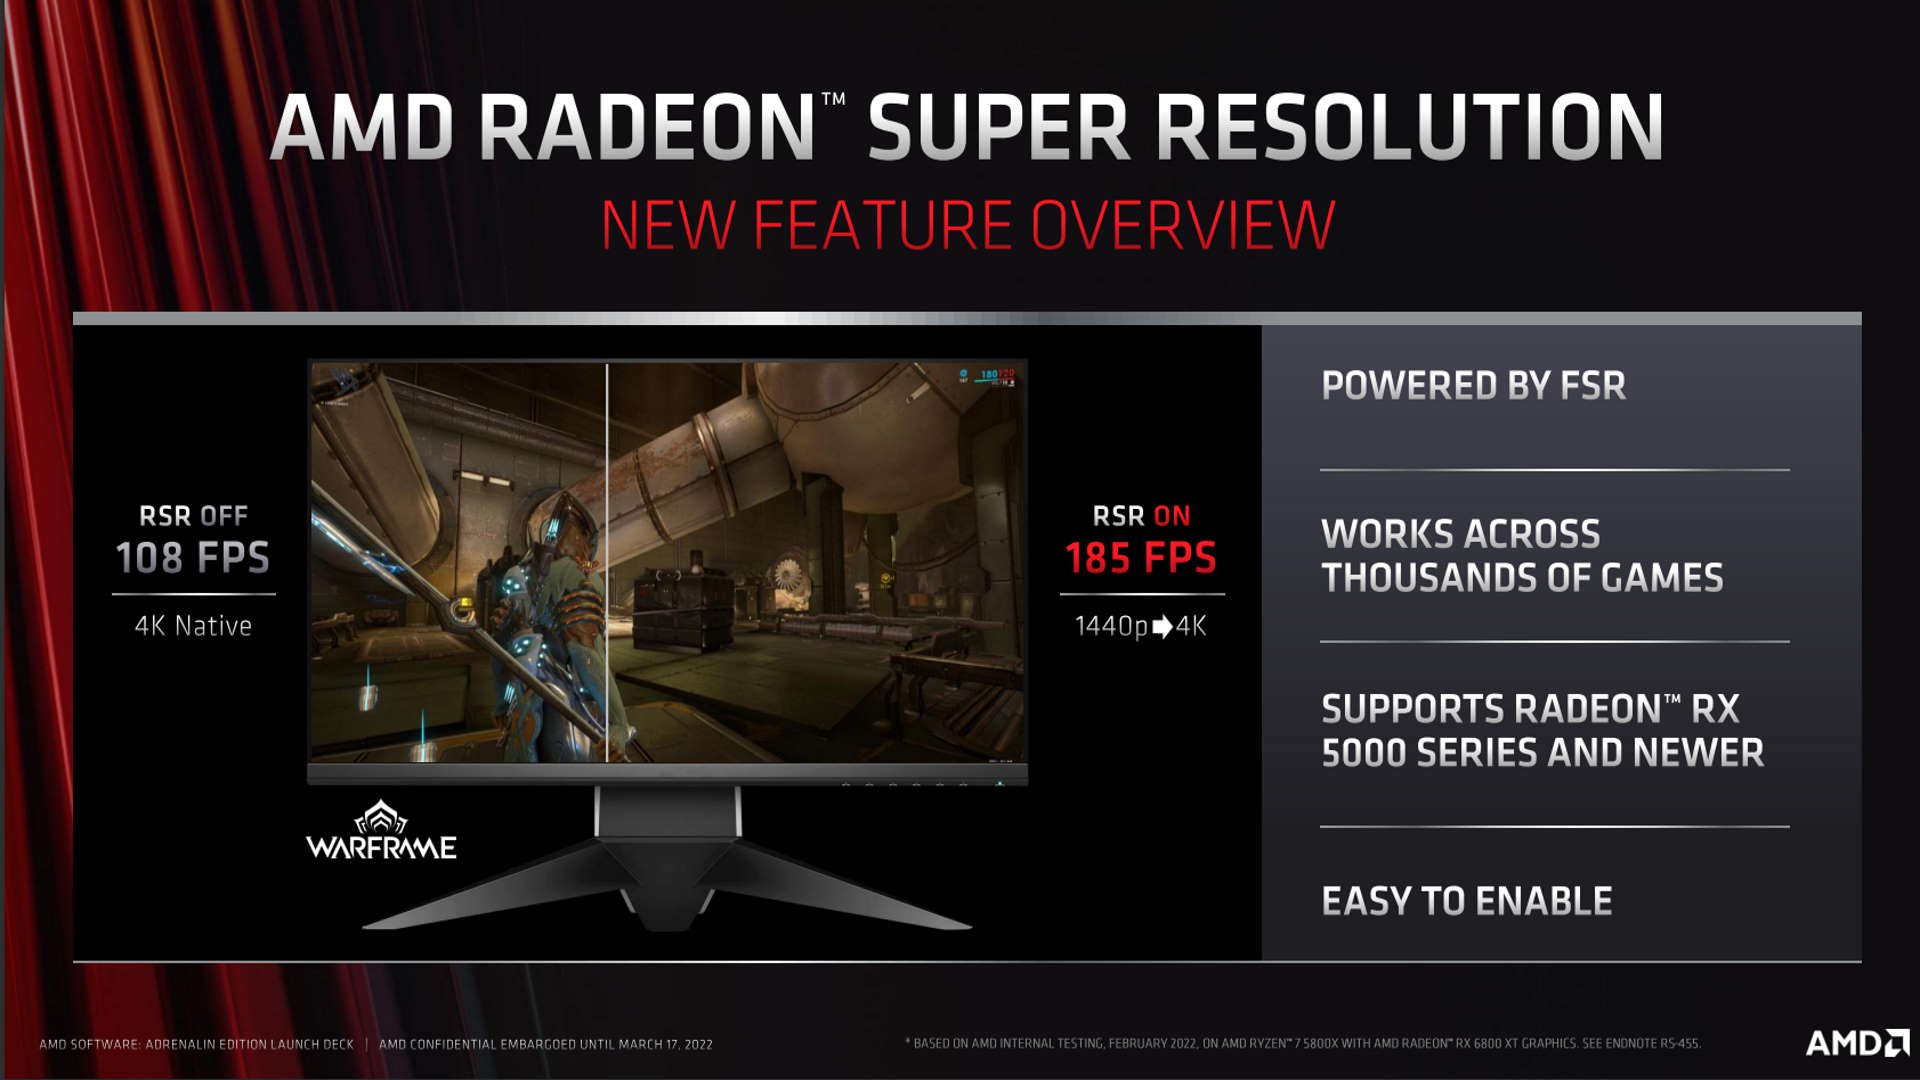 AMD Radeon Super Resolution images